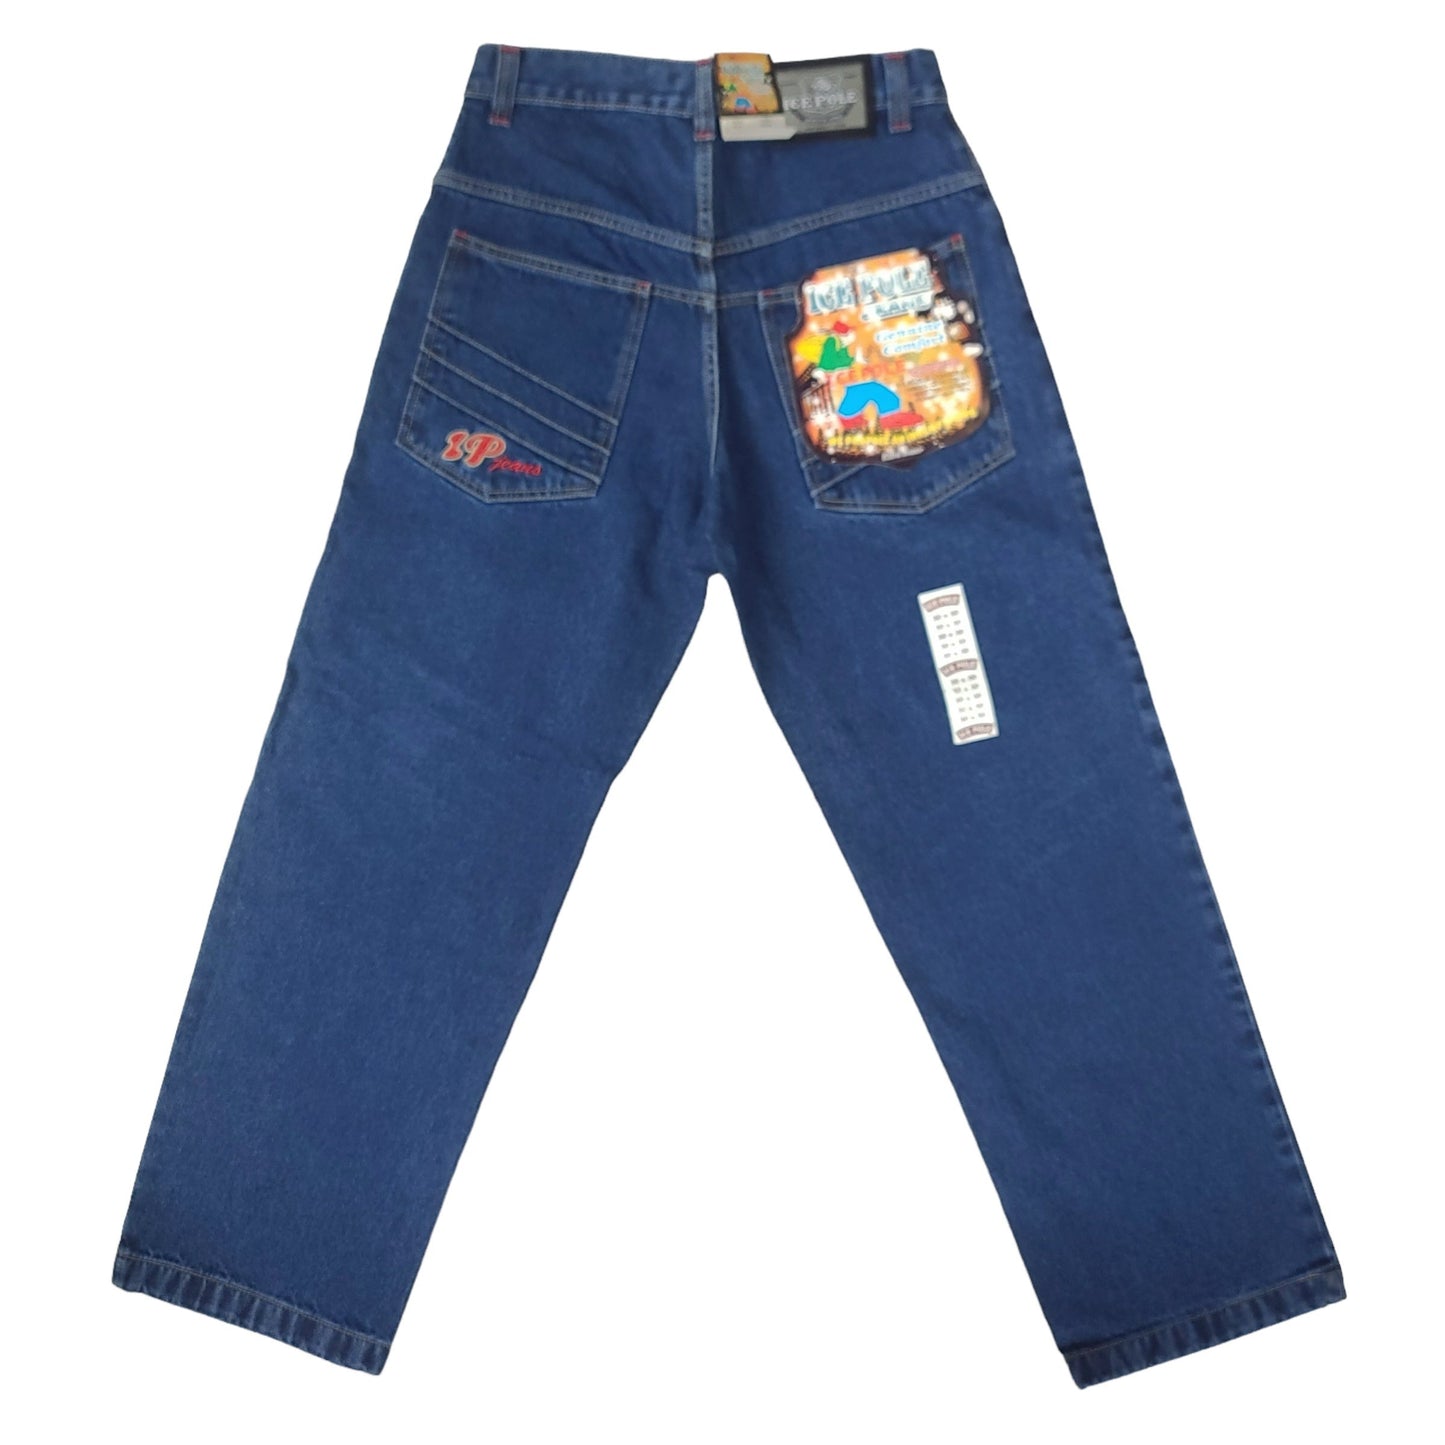 Vintage Y2K Ice Pole N. Blue Denim Embroidered Pants